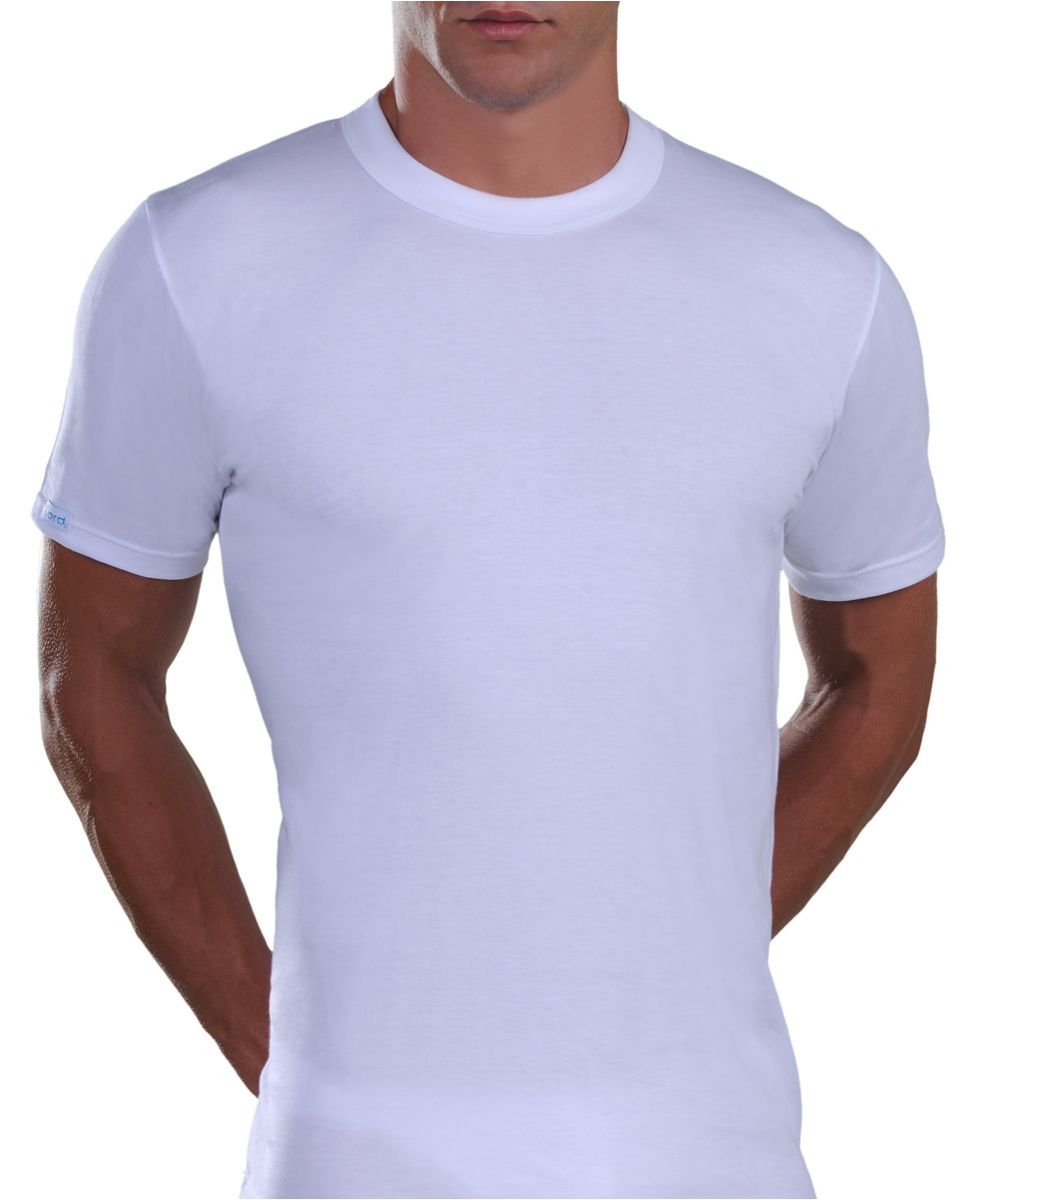  T-Shirt XXL Sizes Lord Lord T-shirt, big sizes 1525-3